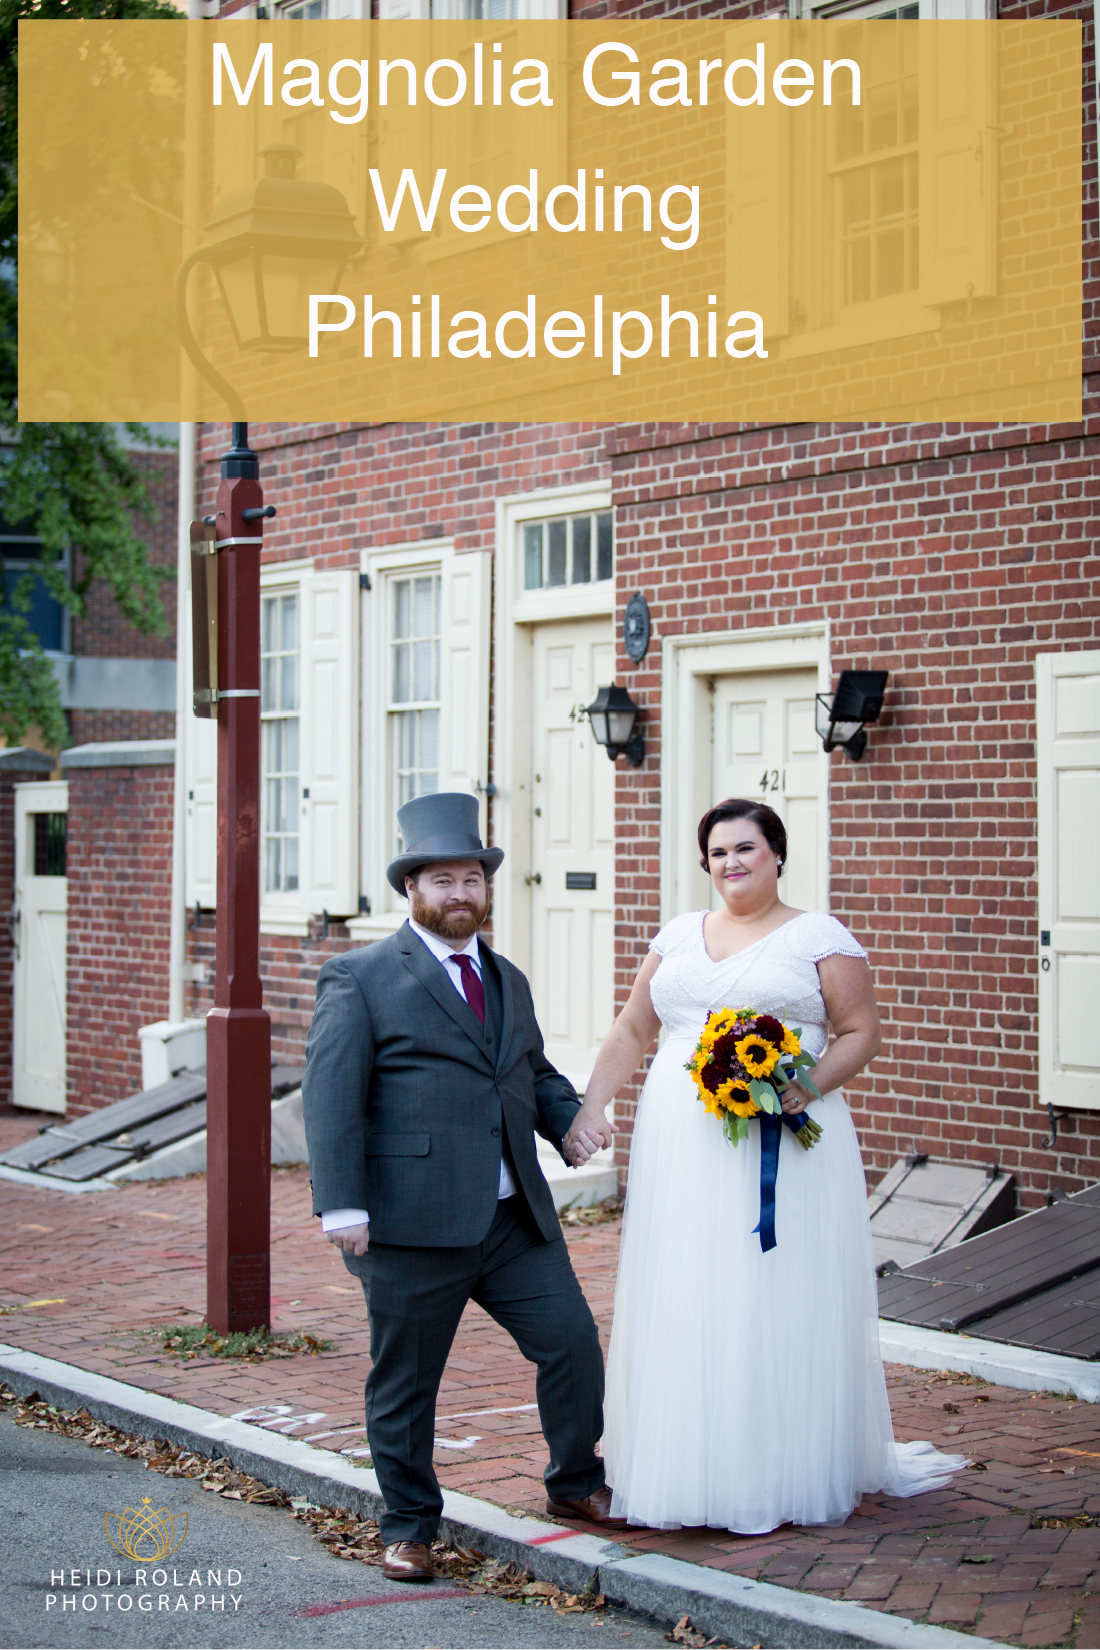 Magnolia Gardens wedding photos Philadelphia PA Heidi Roland Photography